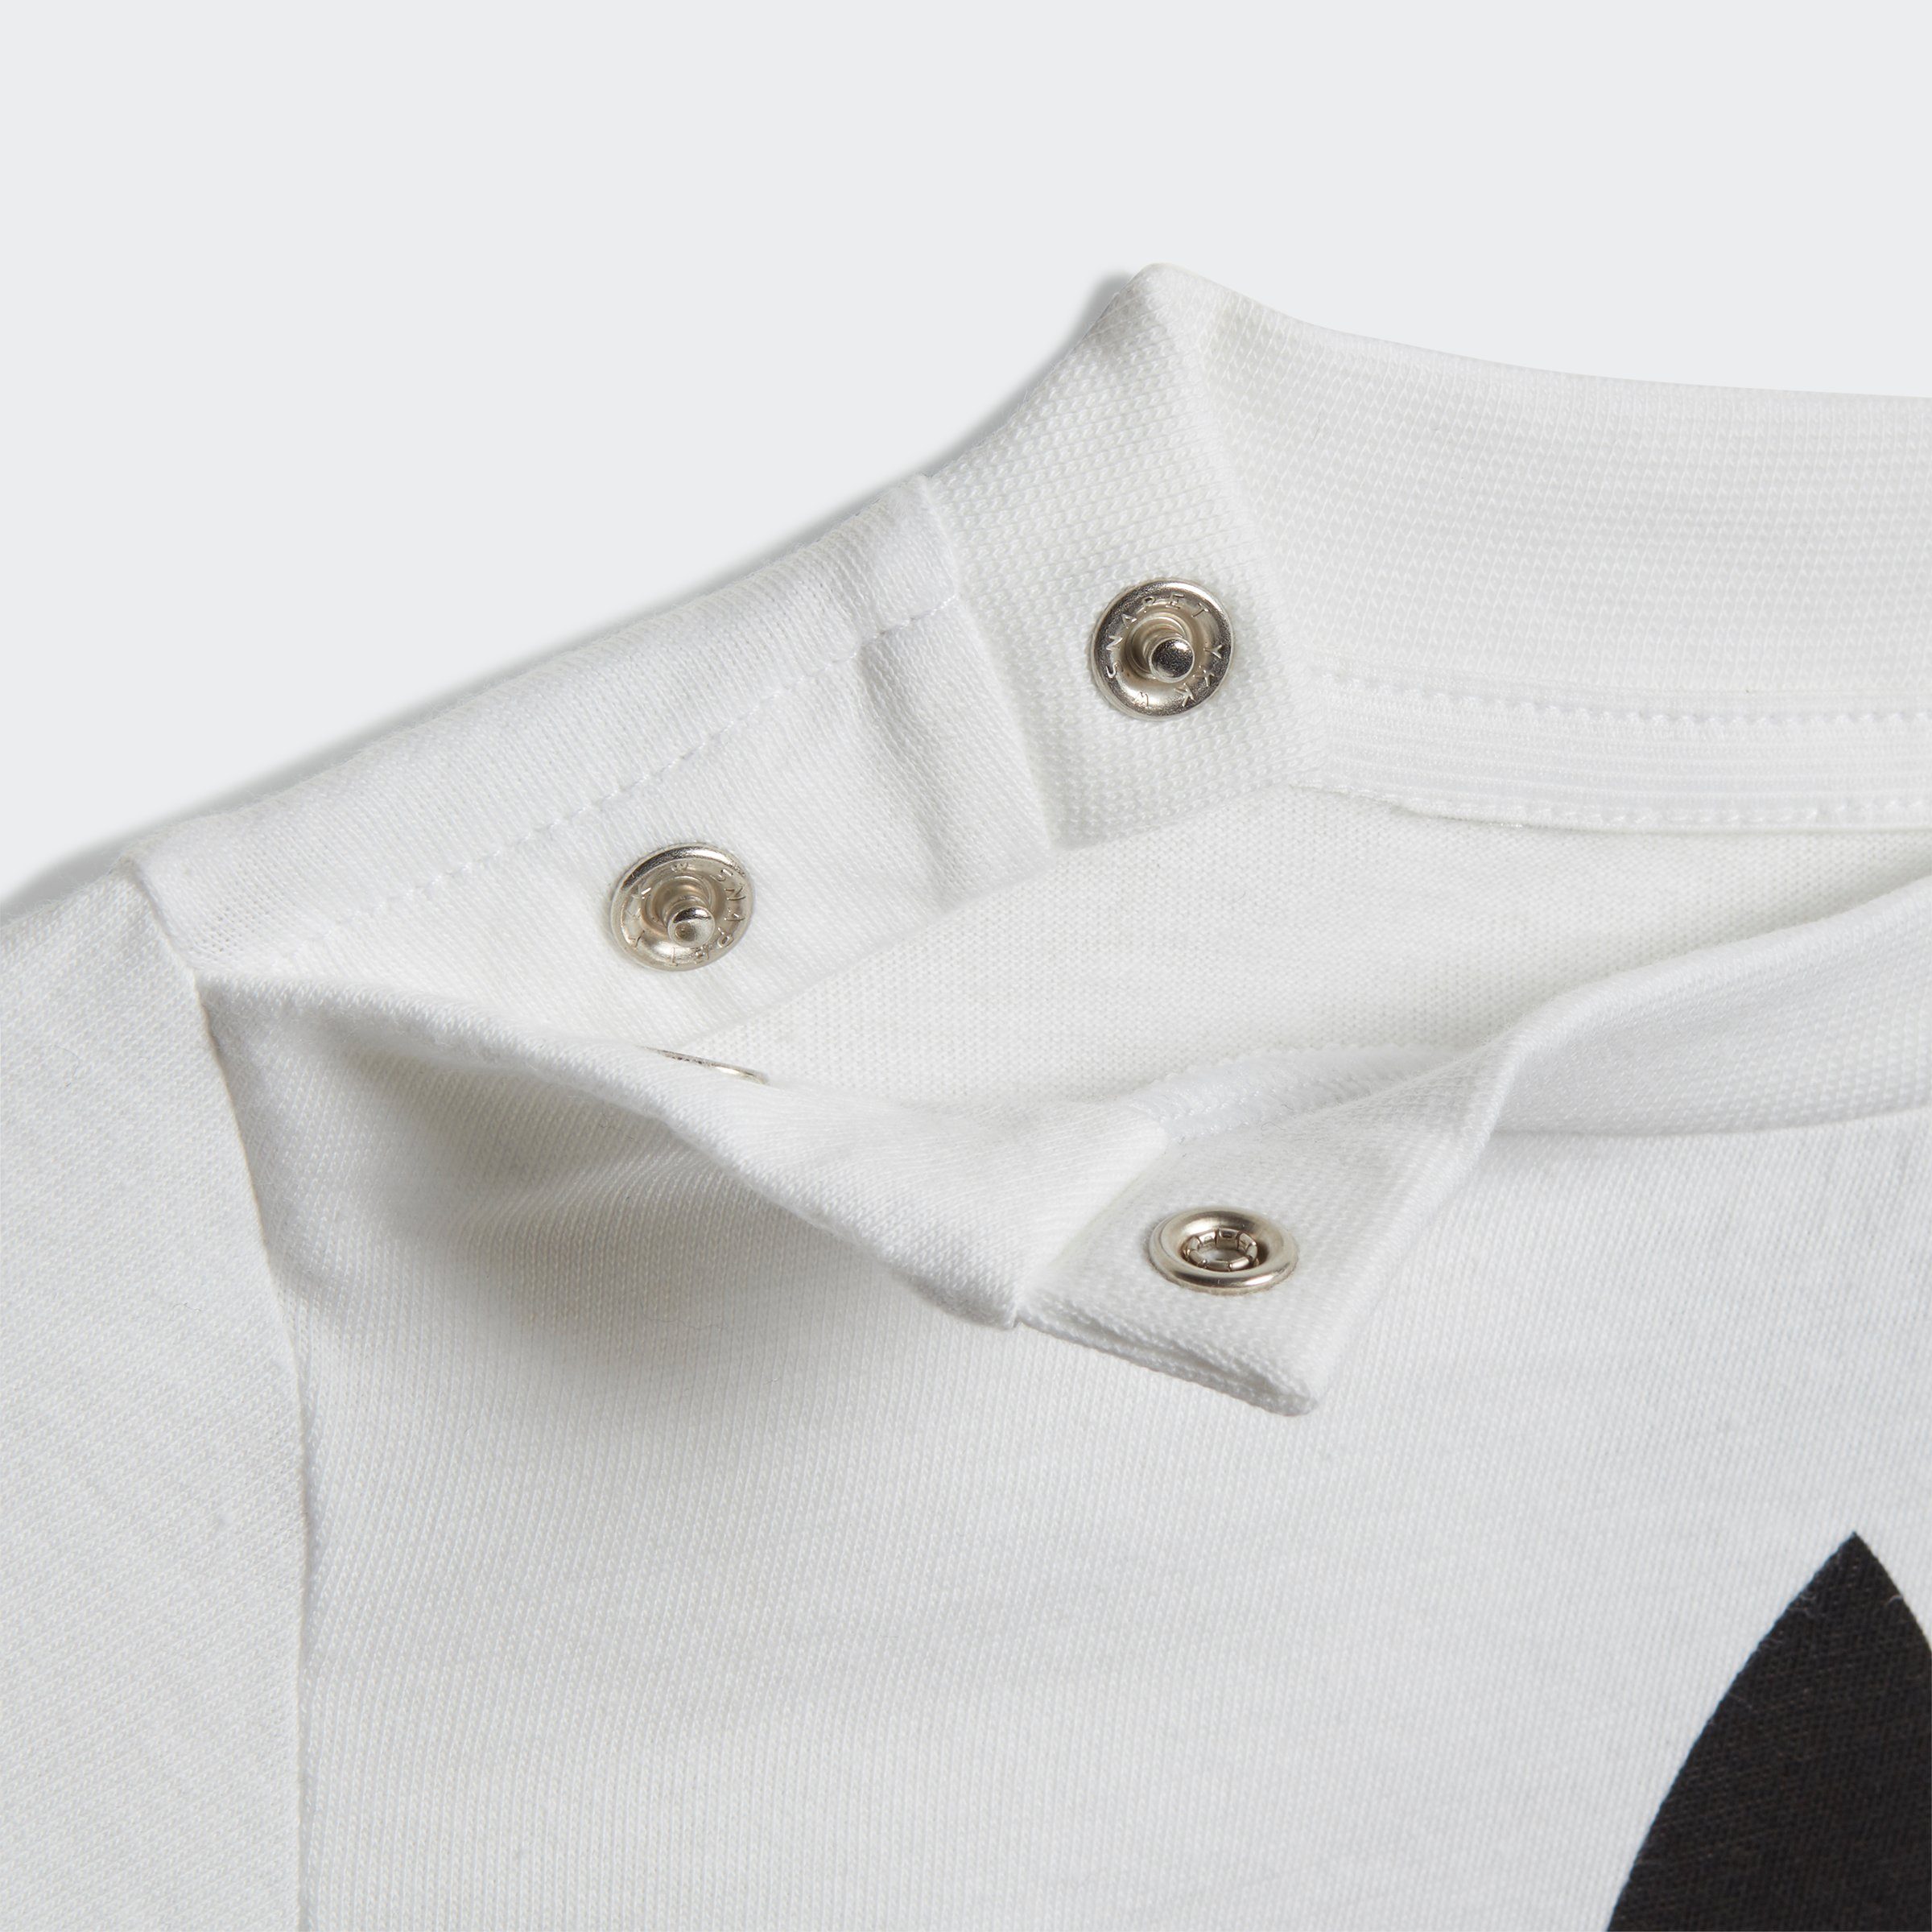 Originals adidas & SET TREFOIL T-Shirt White (Set) UND SHORTS / Black Shorts